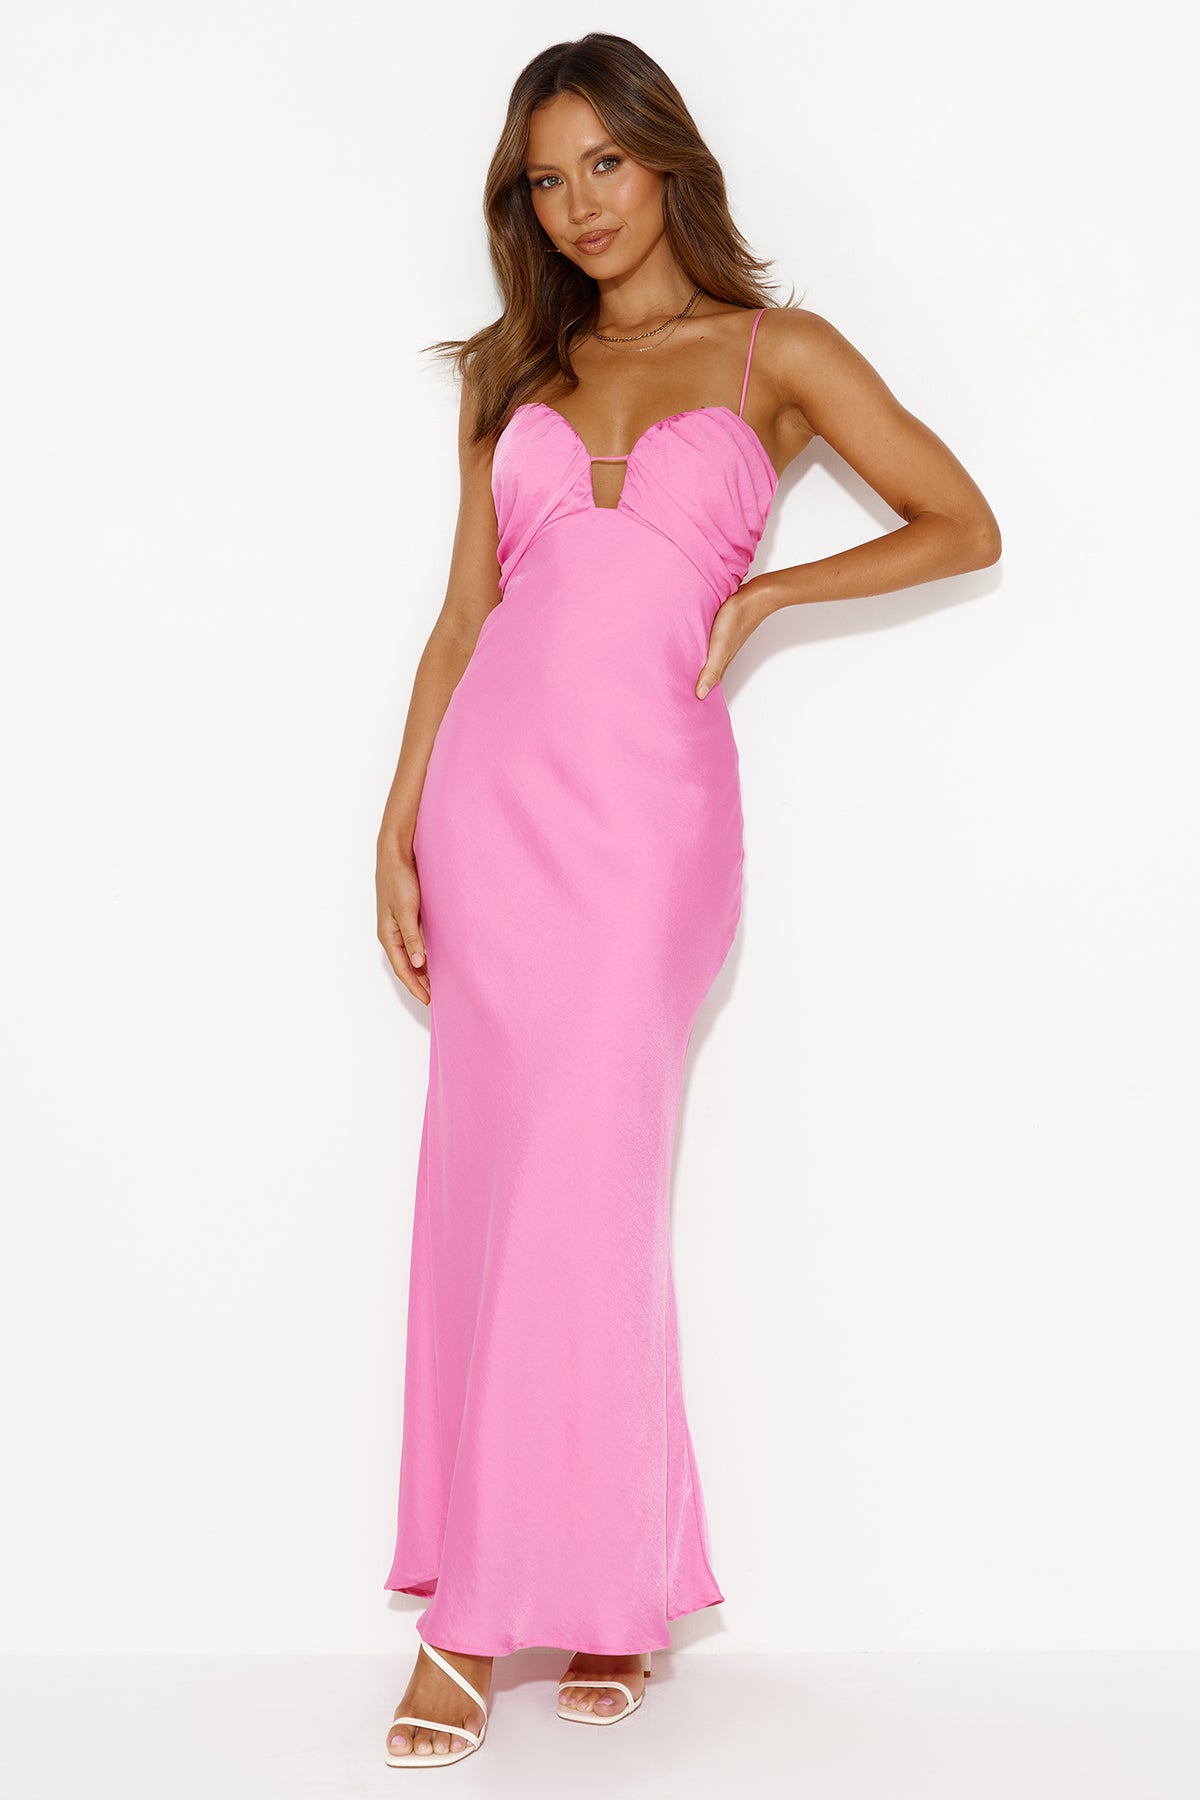 Shop Formal Dress Pink Dress Maxi Castle The In Room